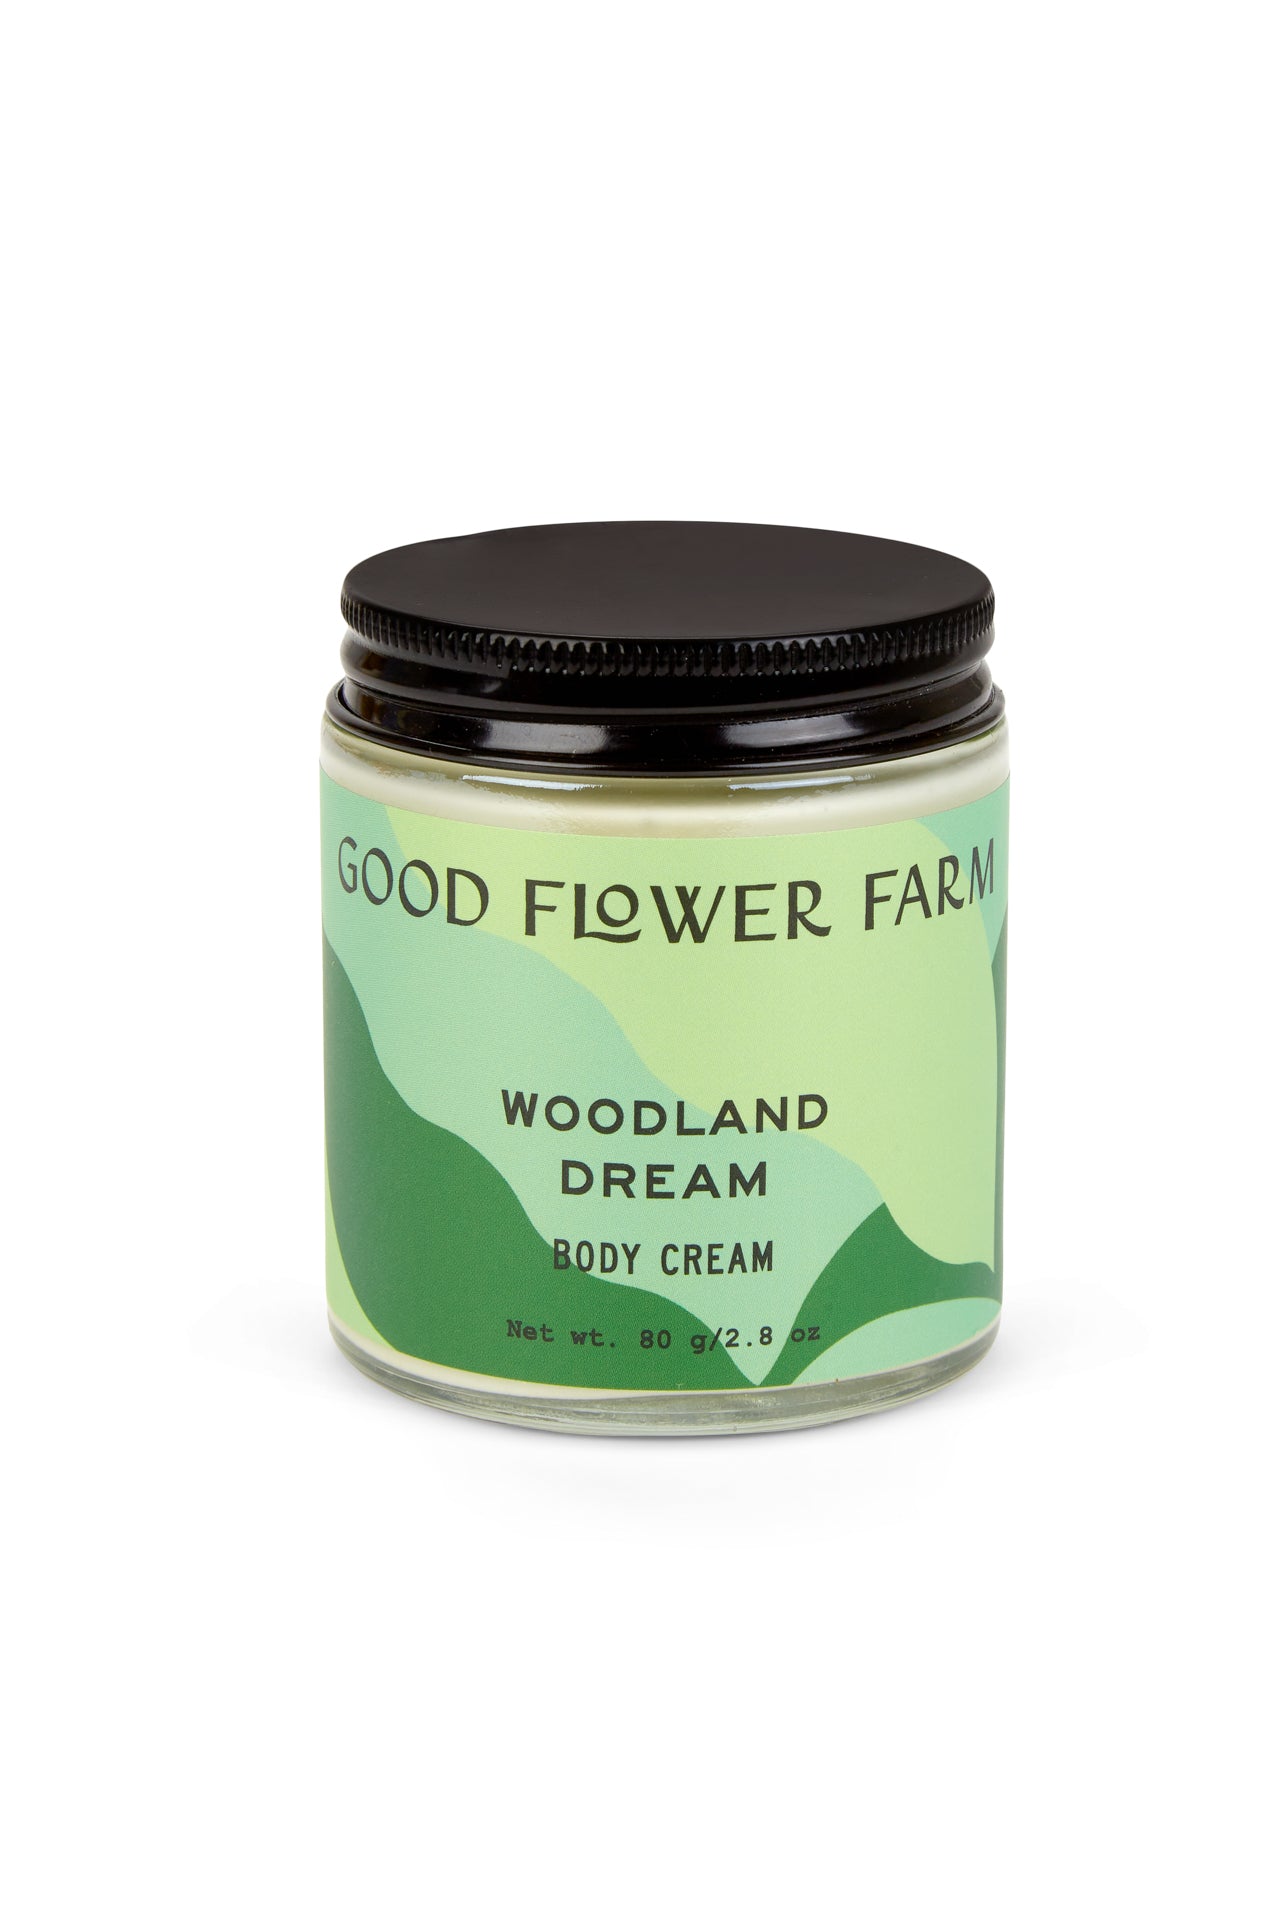 Woodland Dream Body Cream / 4 oz